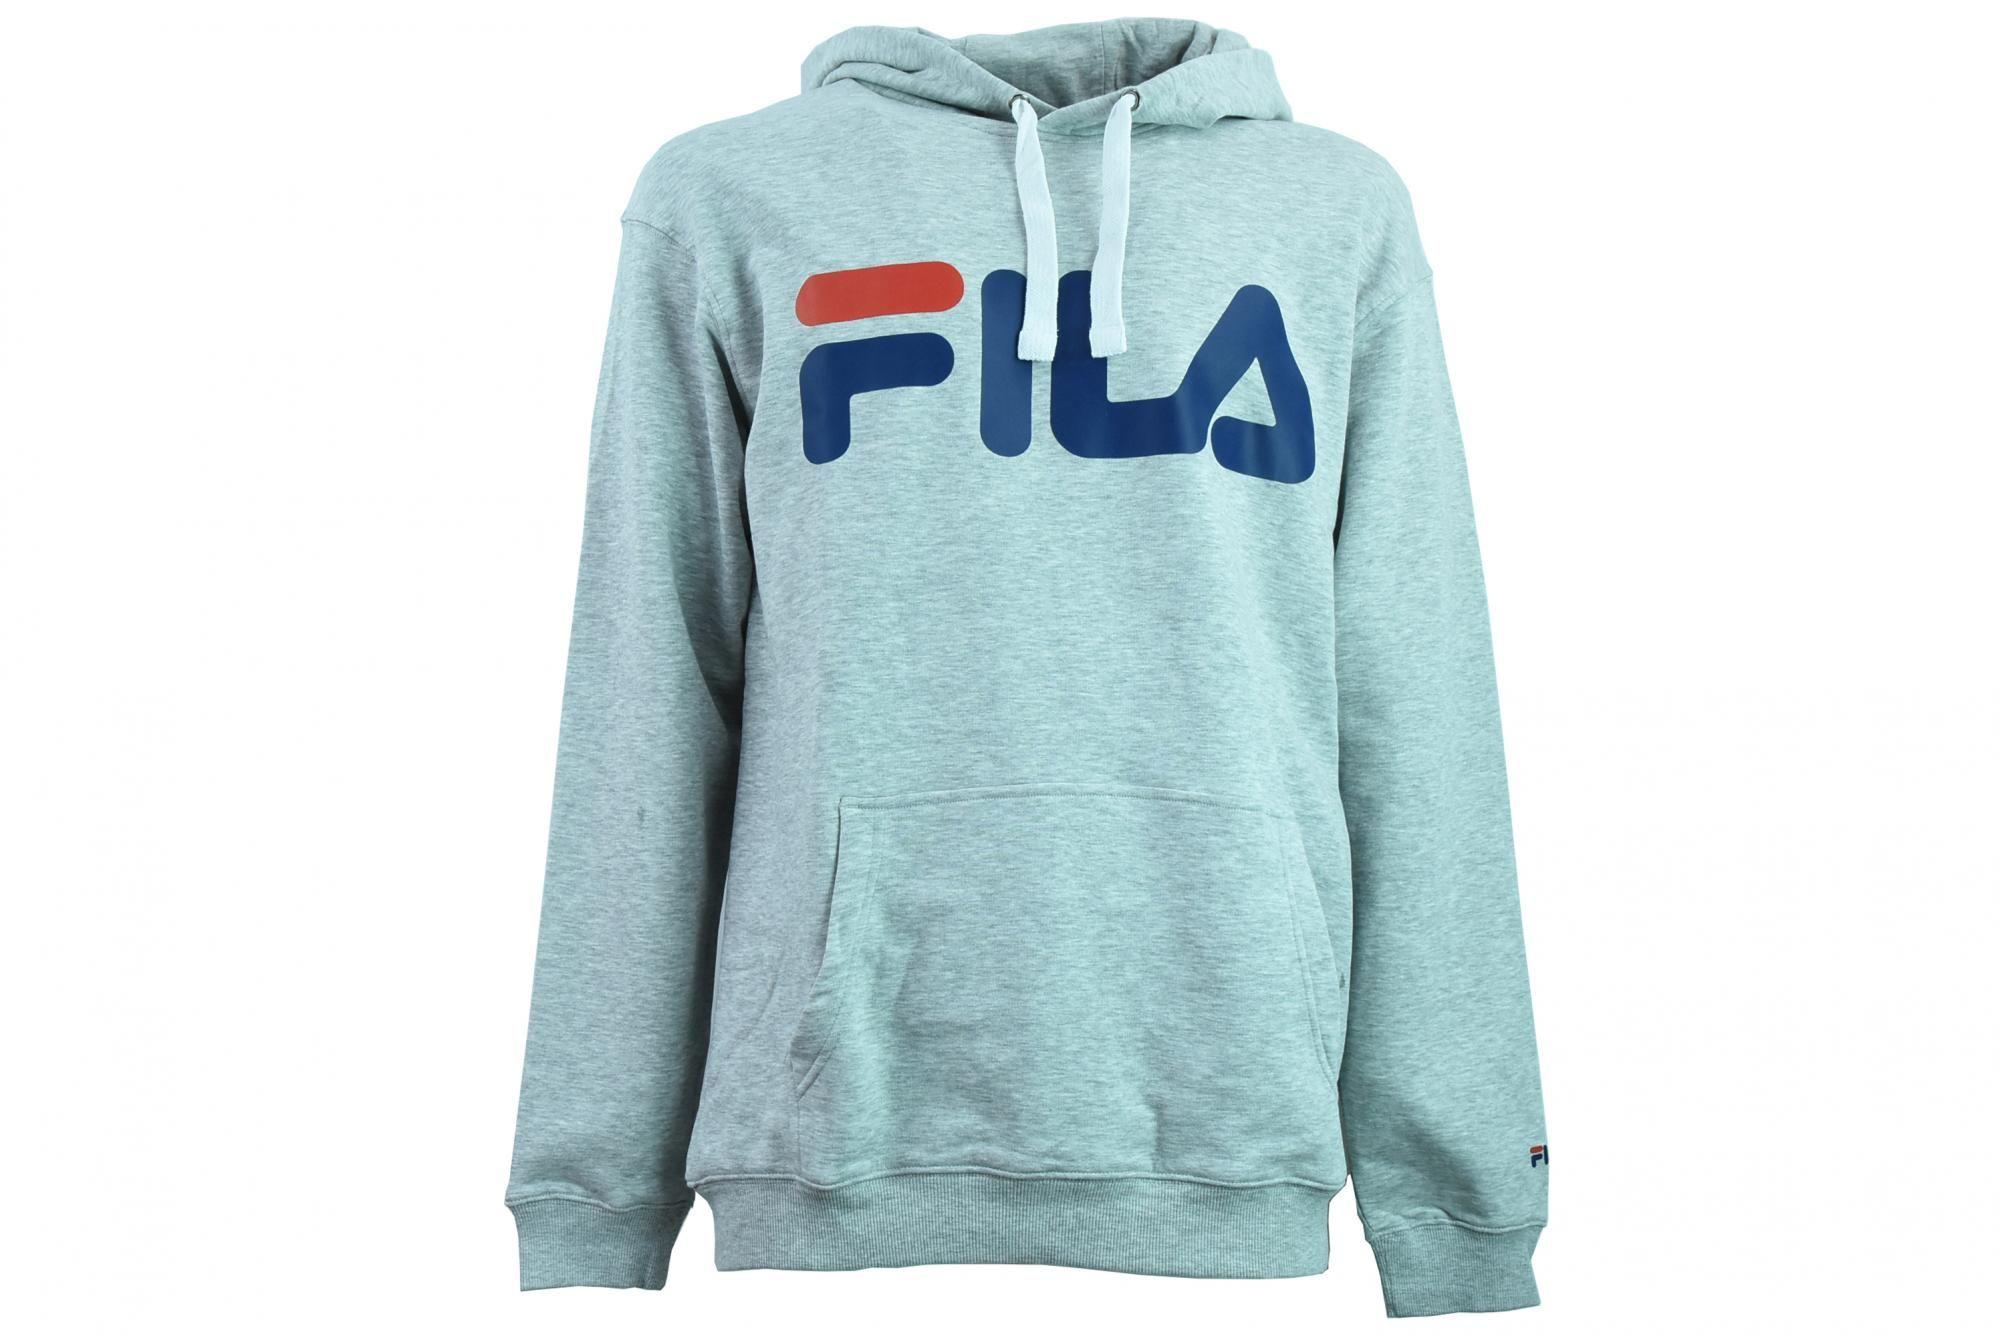 Hood Clothing Logo - Fila A18u unisex clothing hooded sweatshirt 681462 B13 CLASSIC LOGO